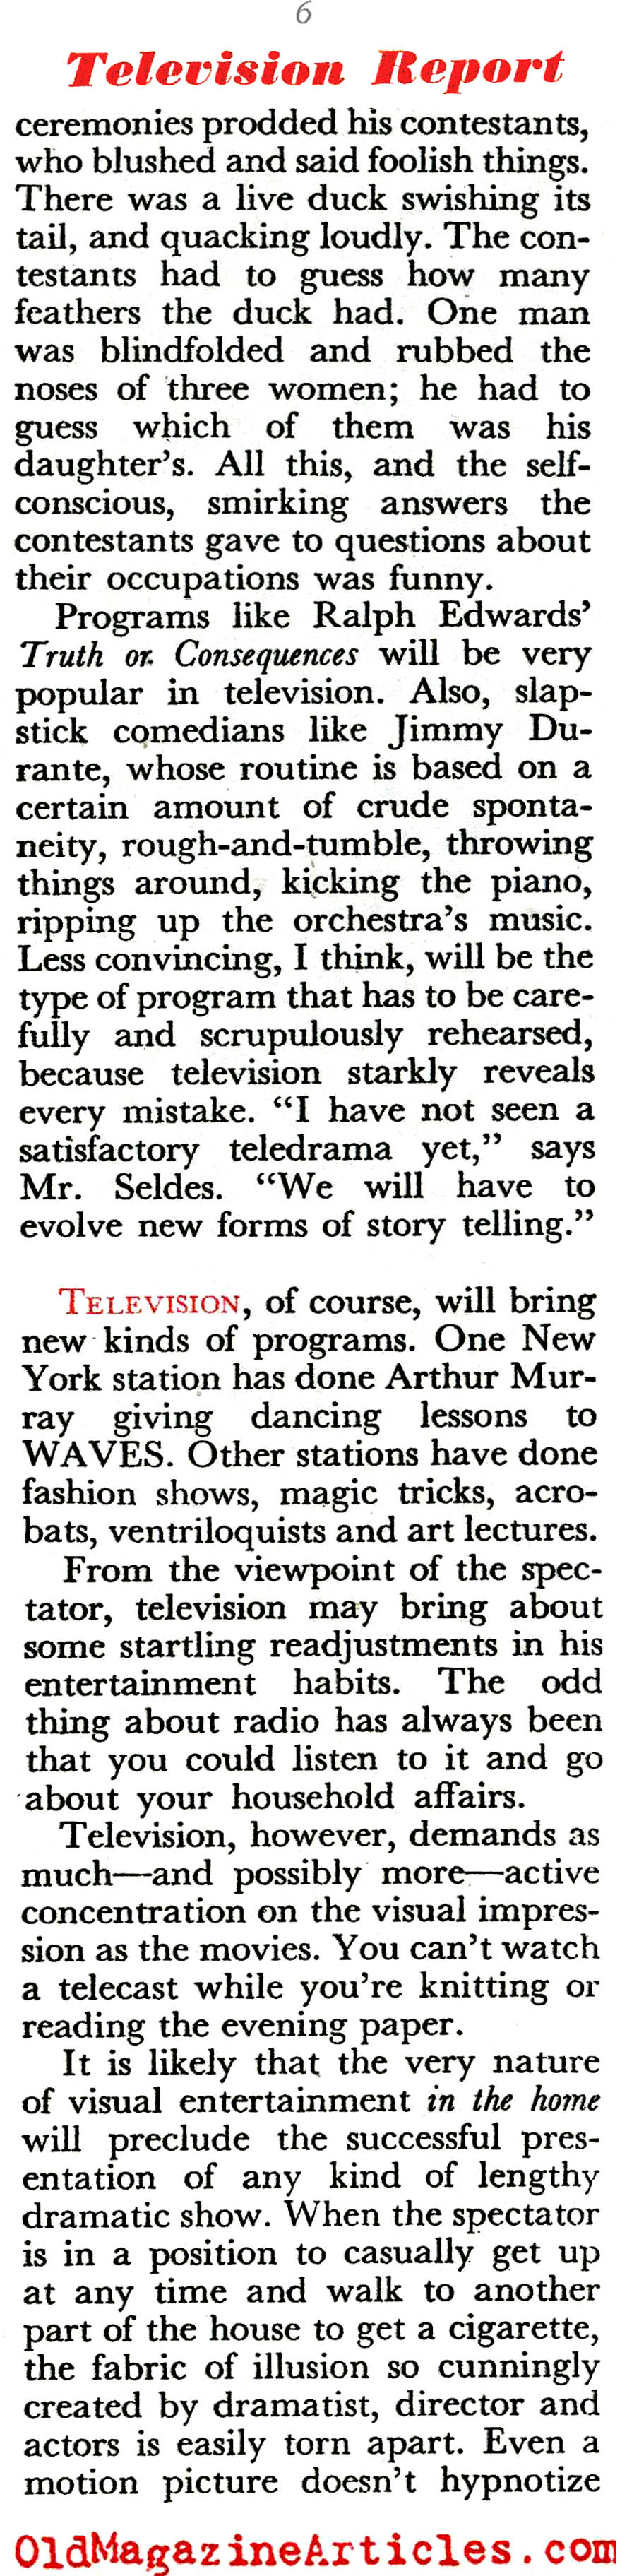 The Television Set (Coronet Magazine, 1945)